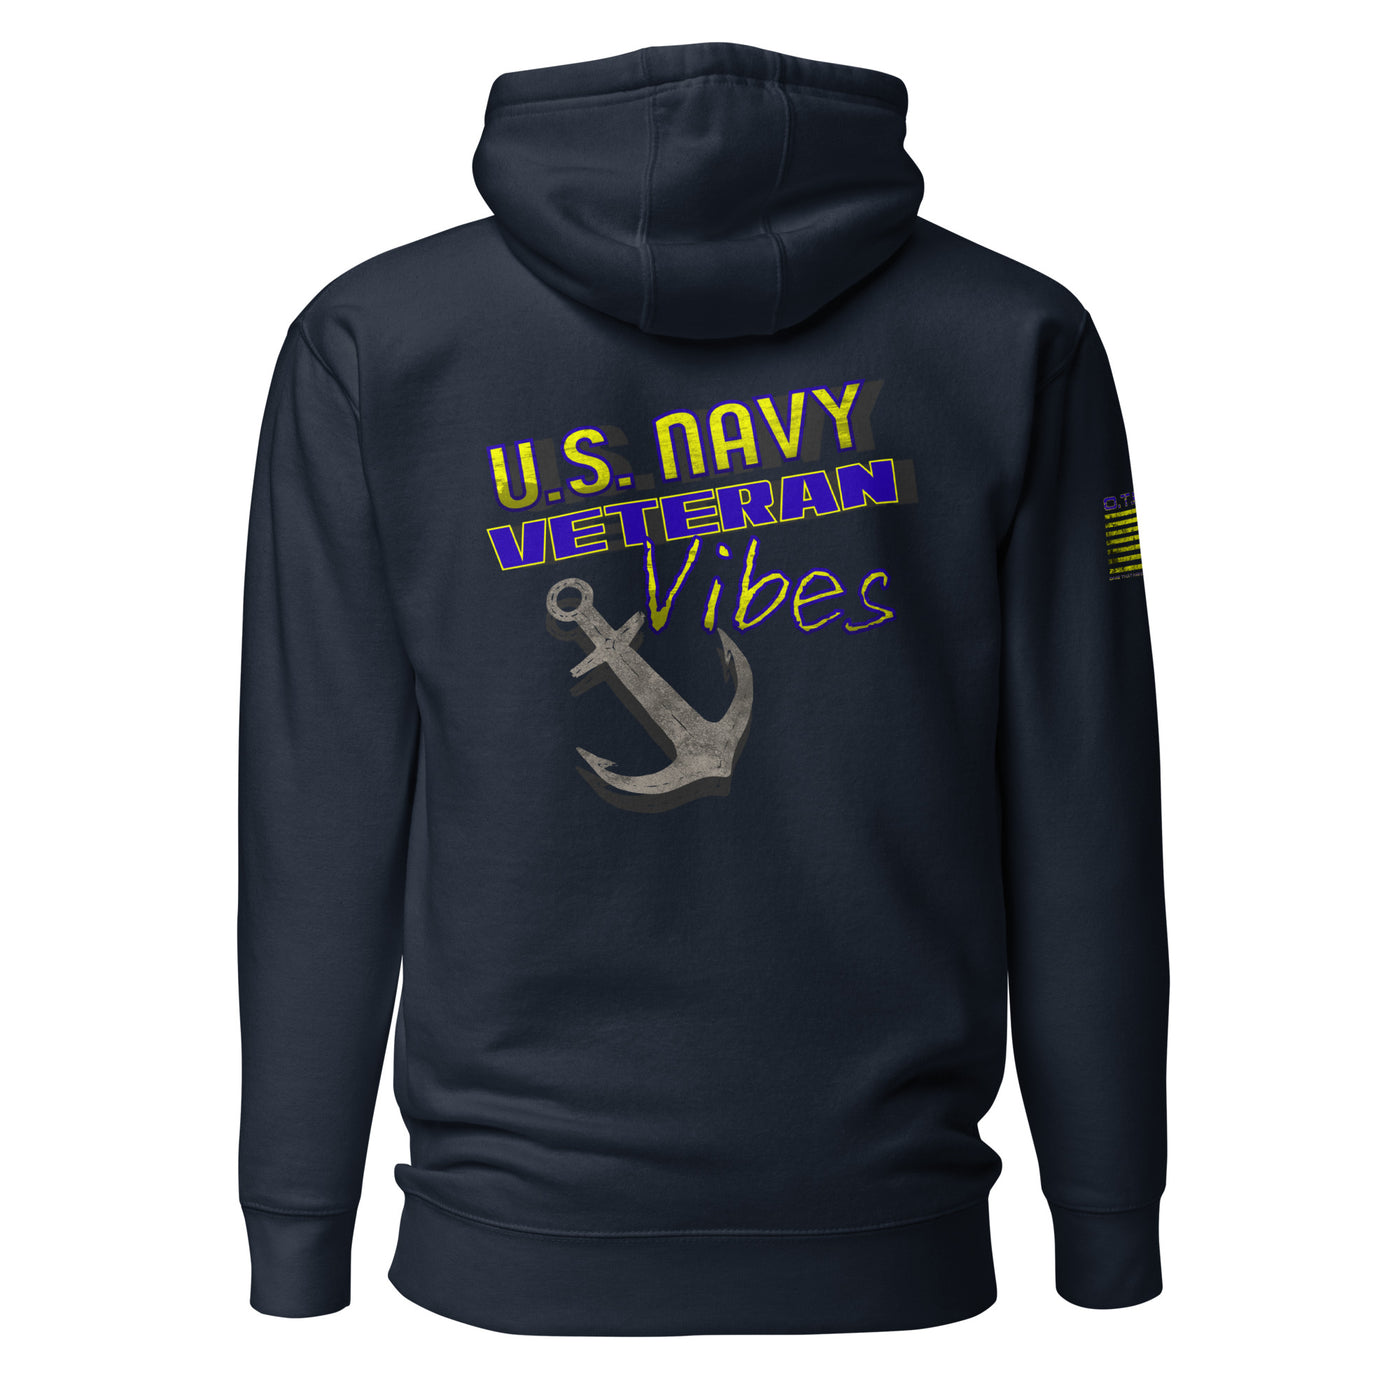 U.S. Navy Veteran Vibes